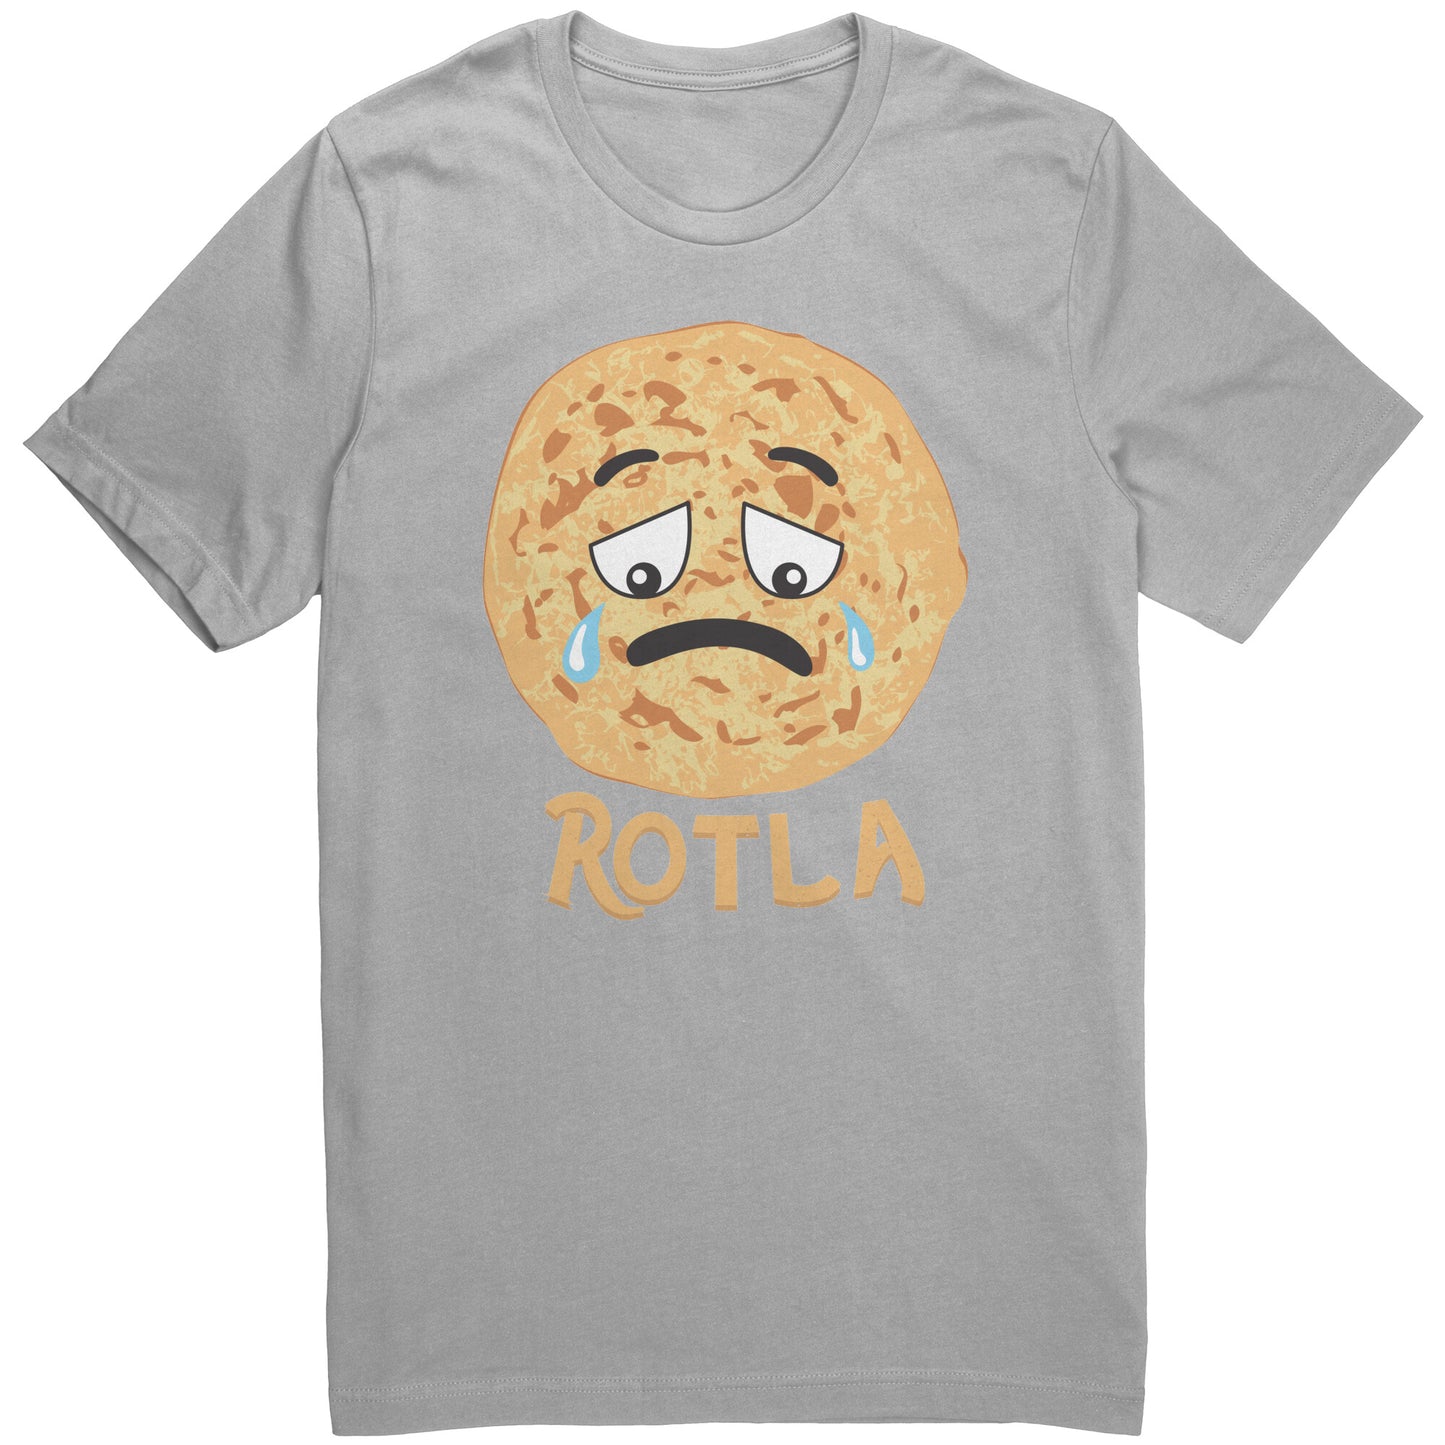 Rotla Shirts (Tank/Short/Long Sleeve Options)